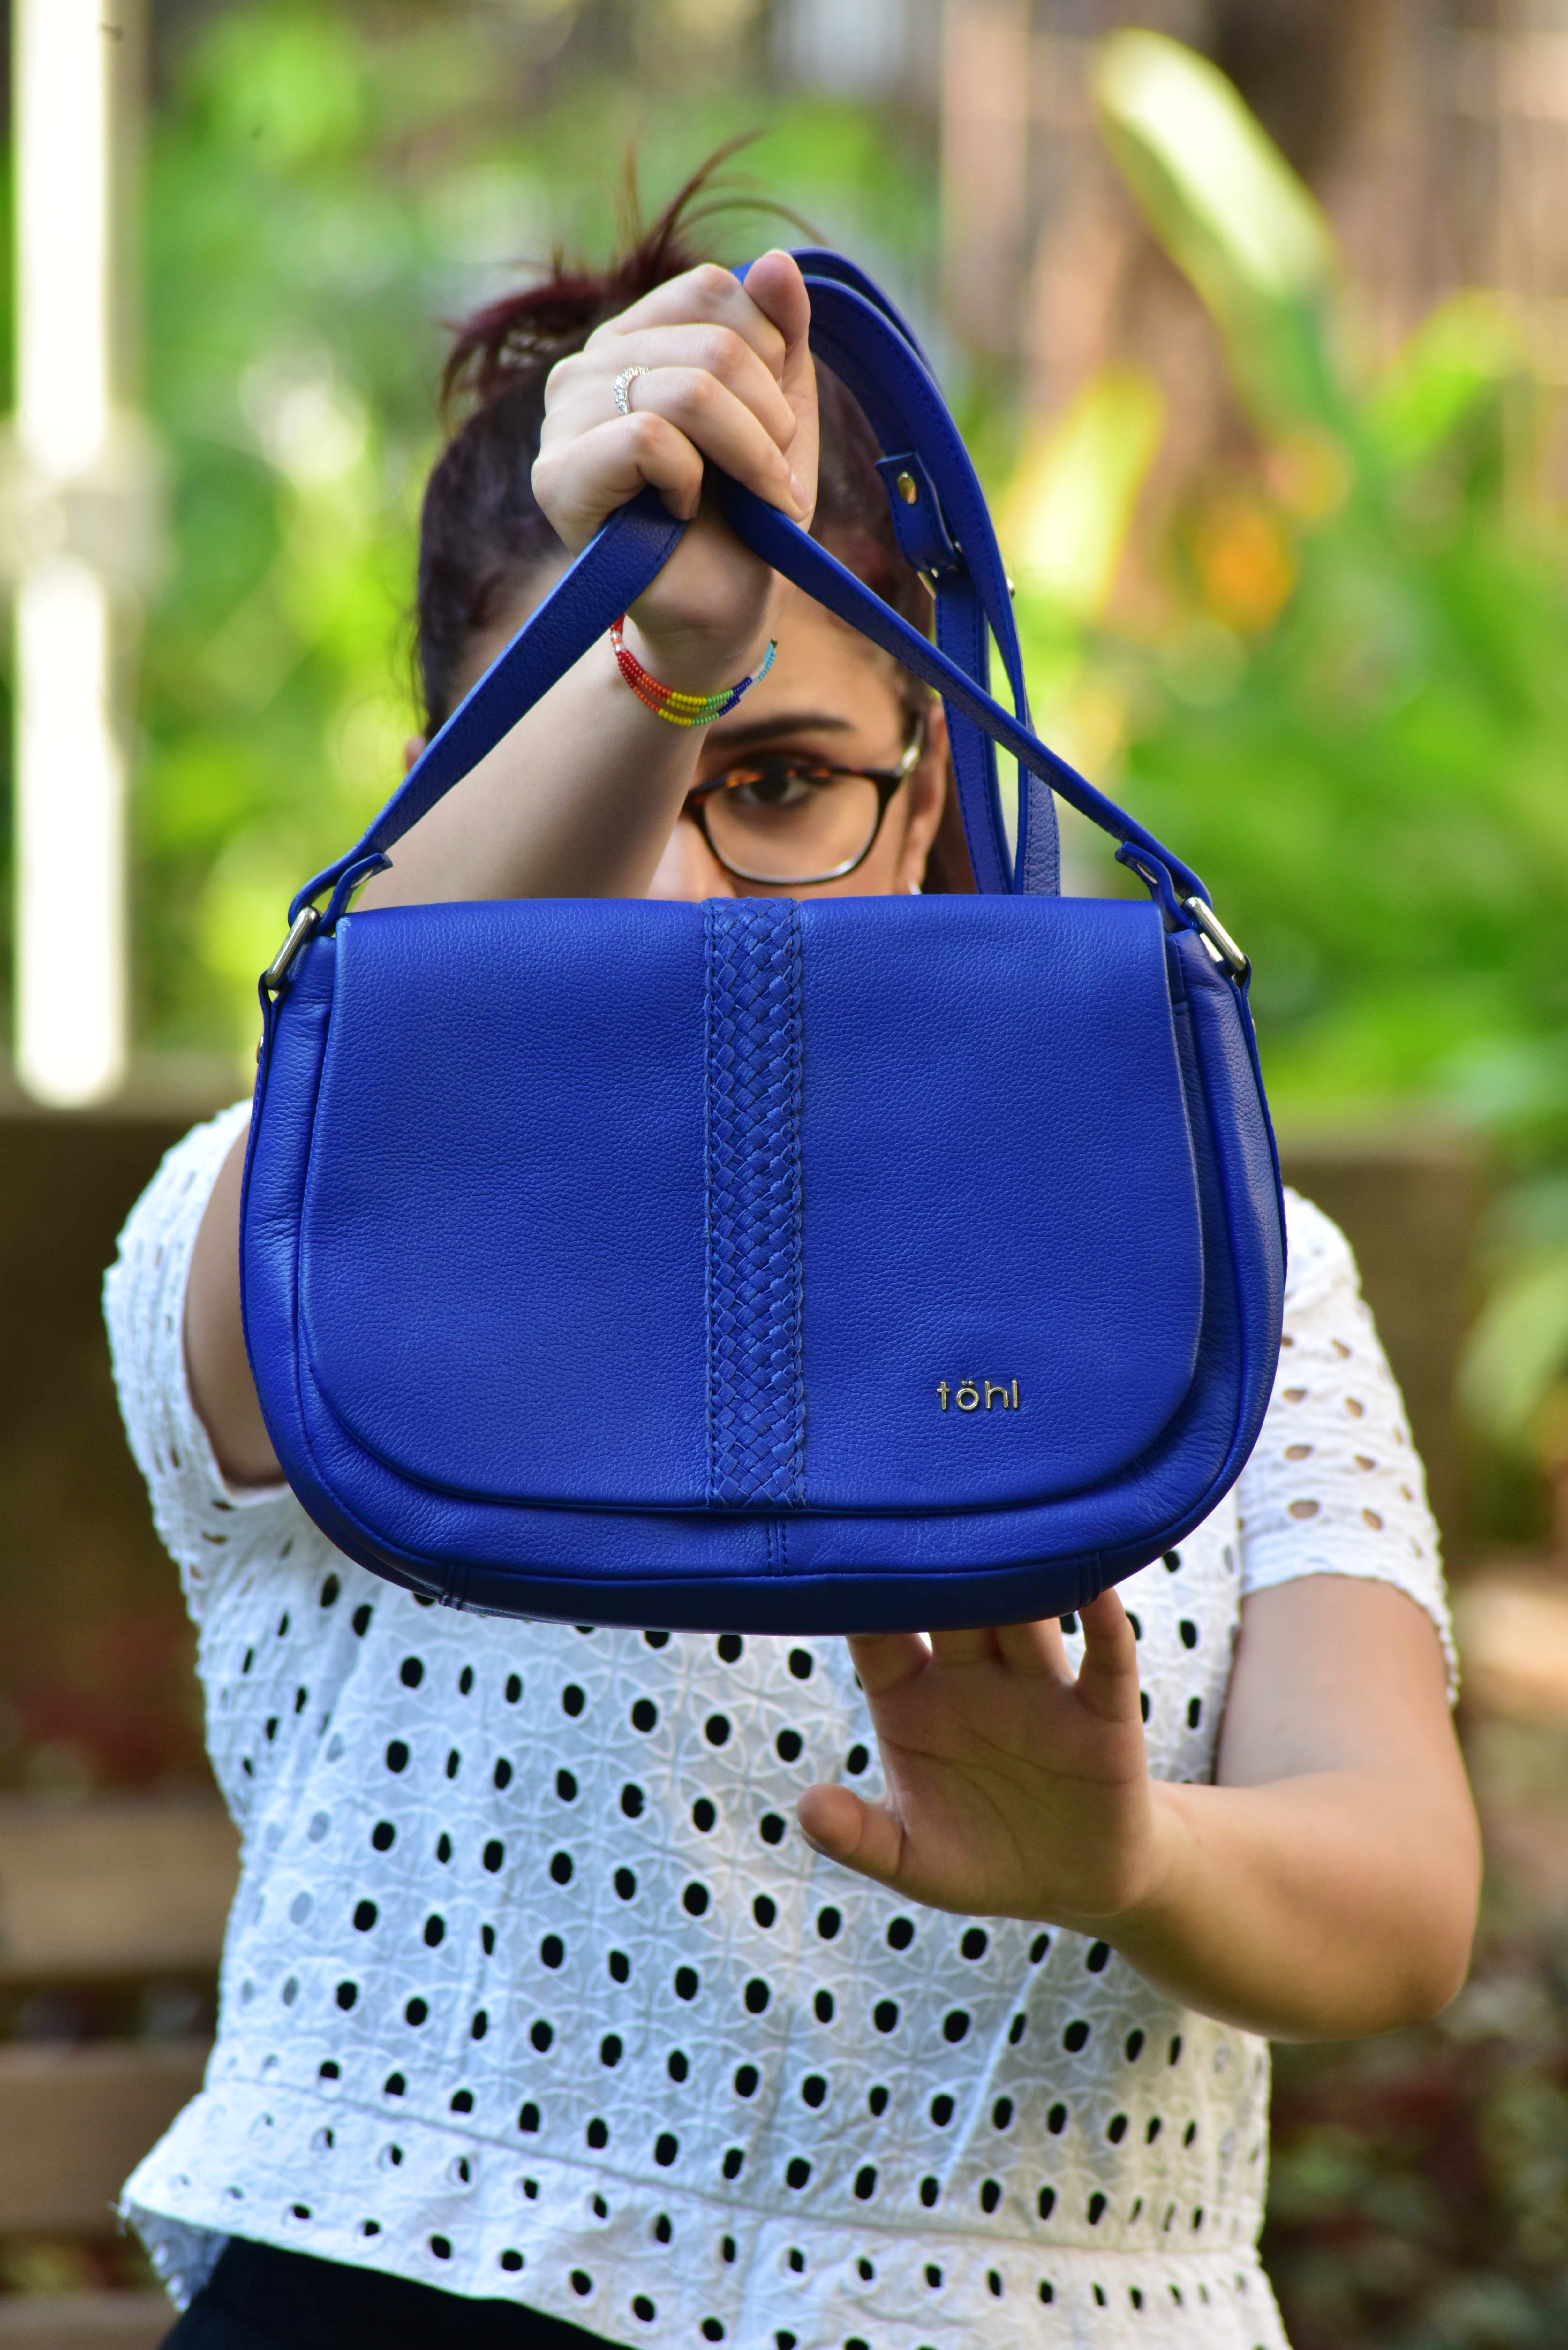 Bag,Shoulder,Blue,Handbag,Cobalt blue,Product,Street fashion,Beauty,Joint,Fashion accessory